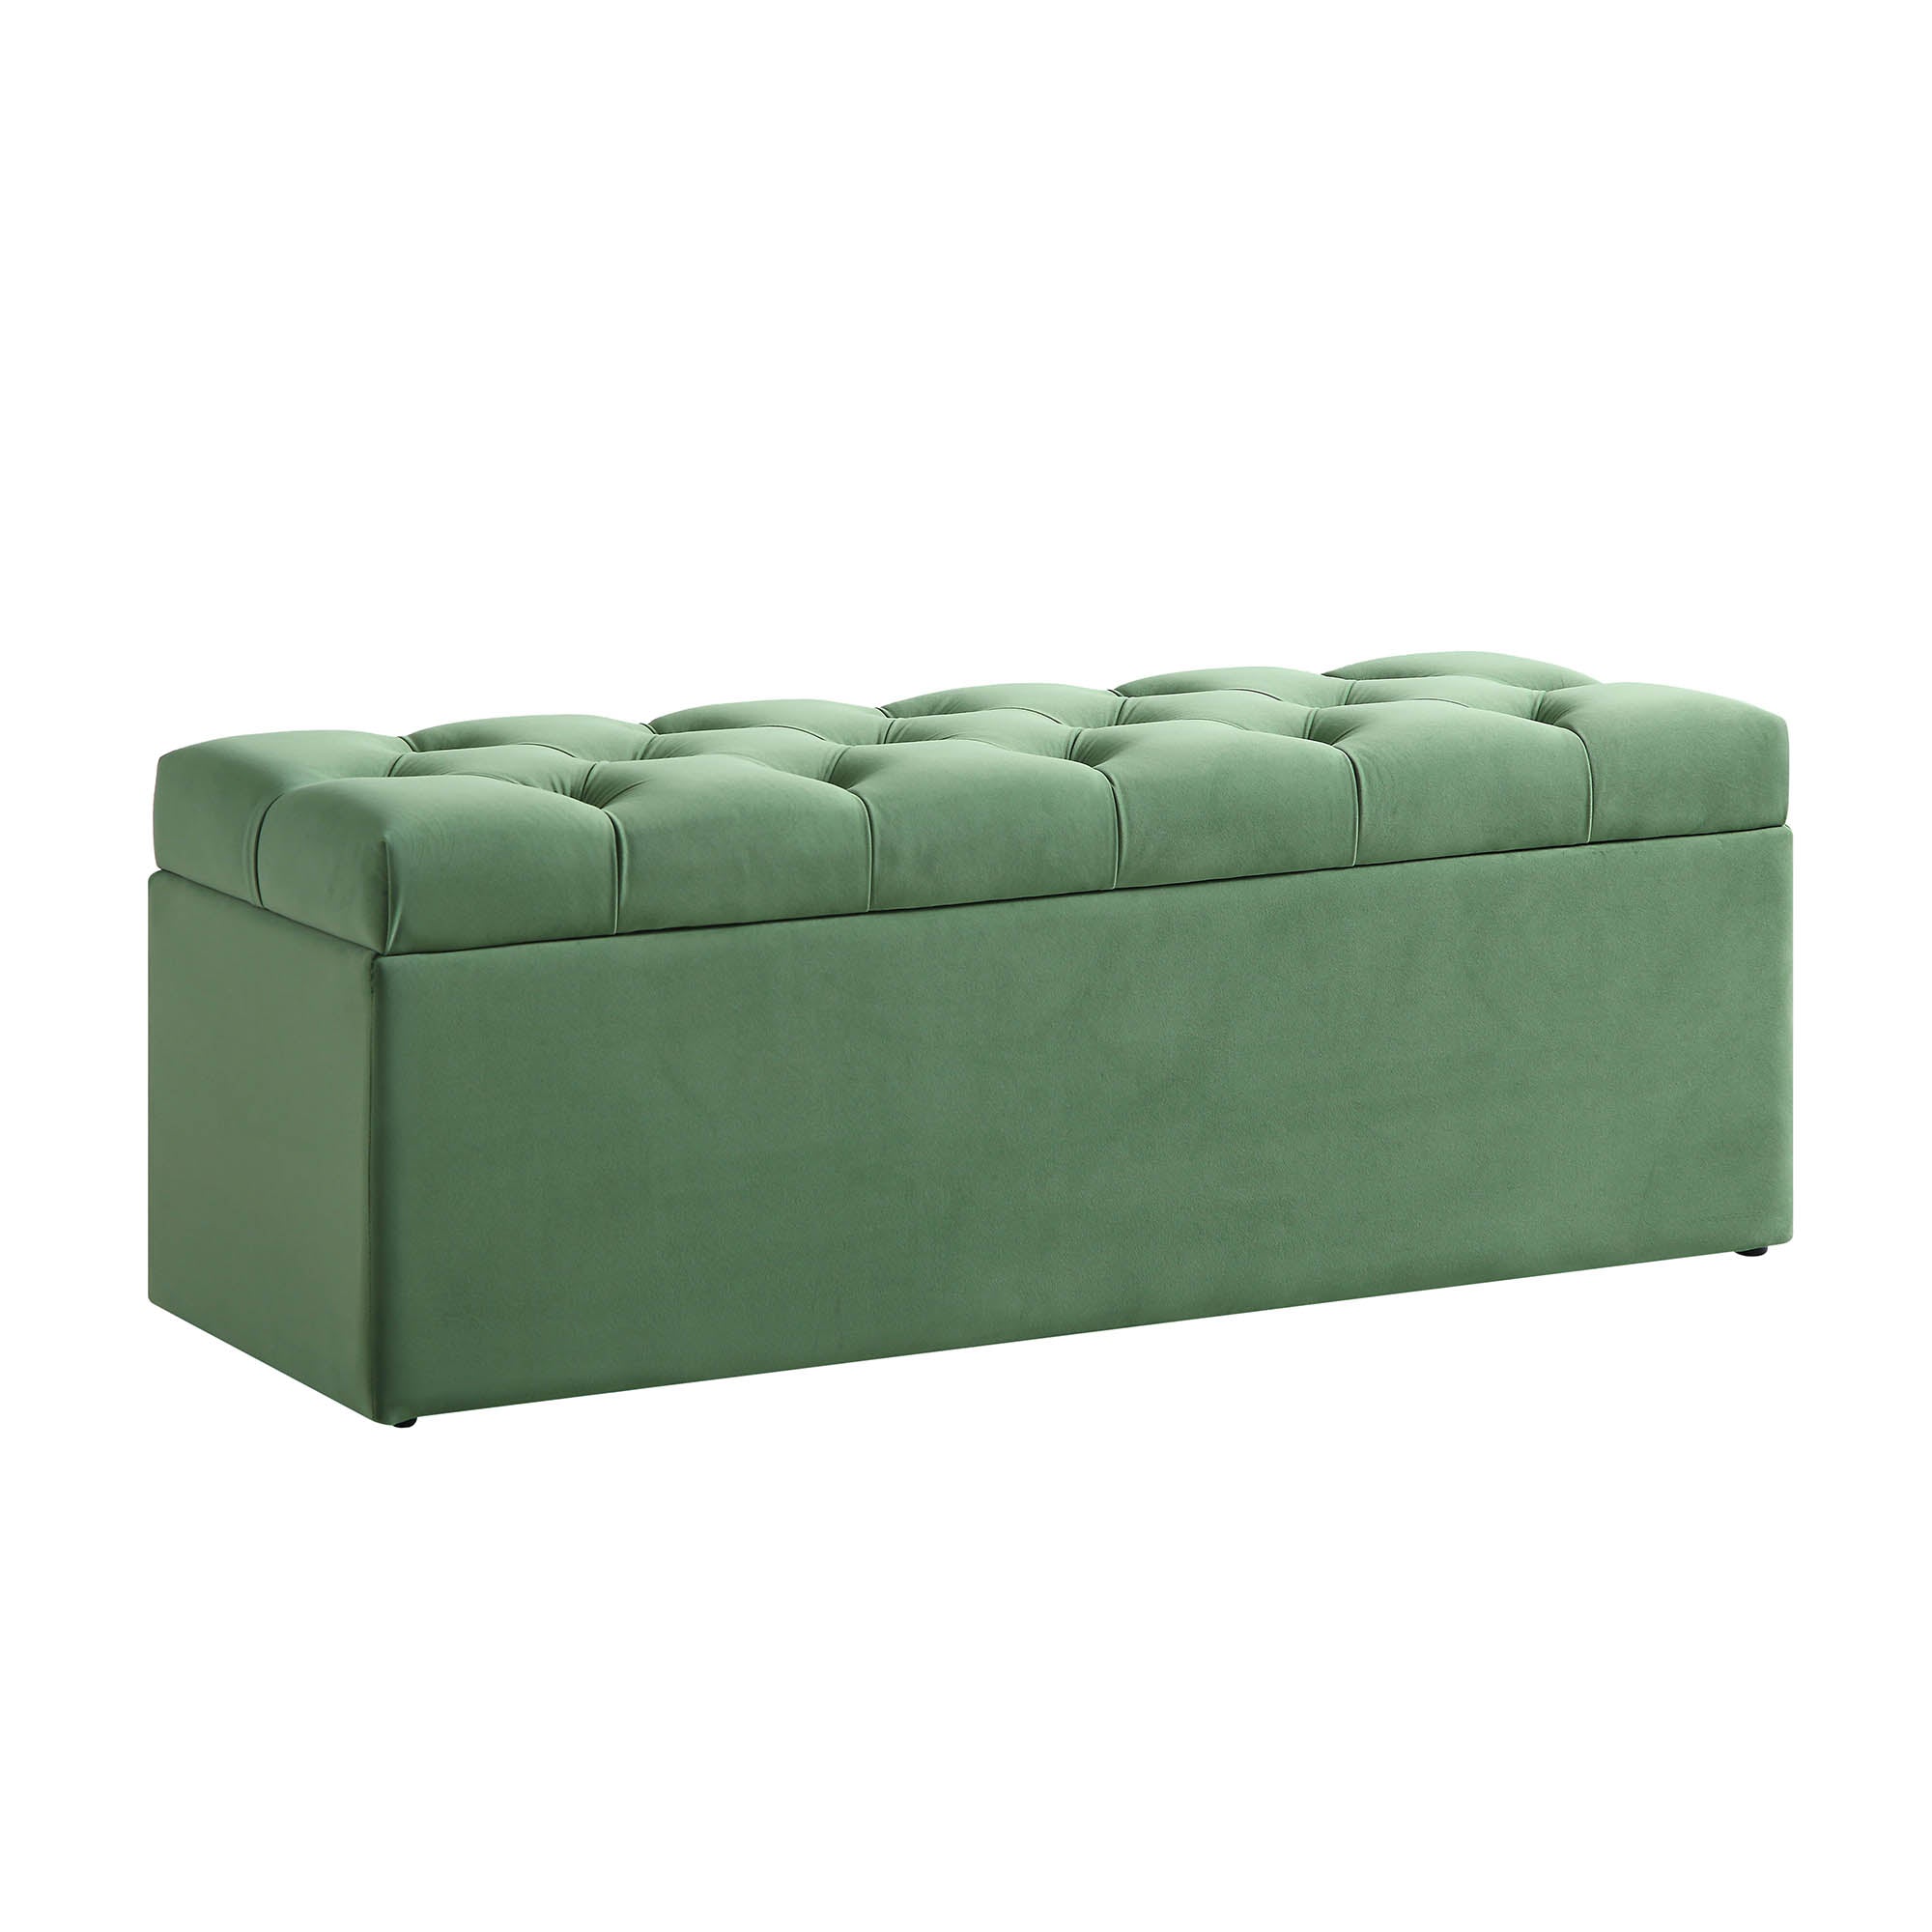 Leamington Deep-Buttoned Ottoman Storage Bench, Meadow Green Velvet